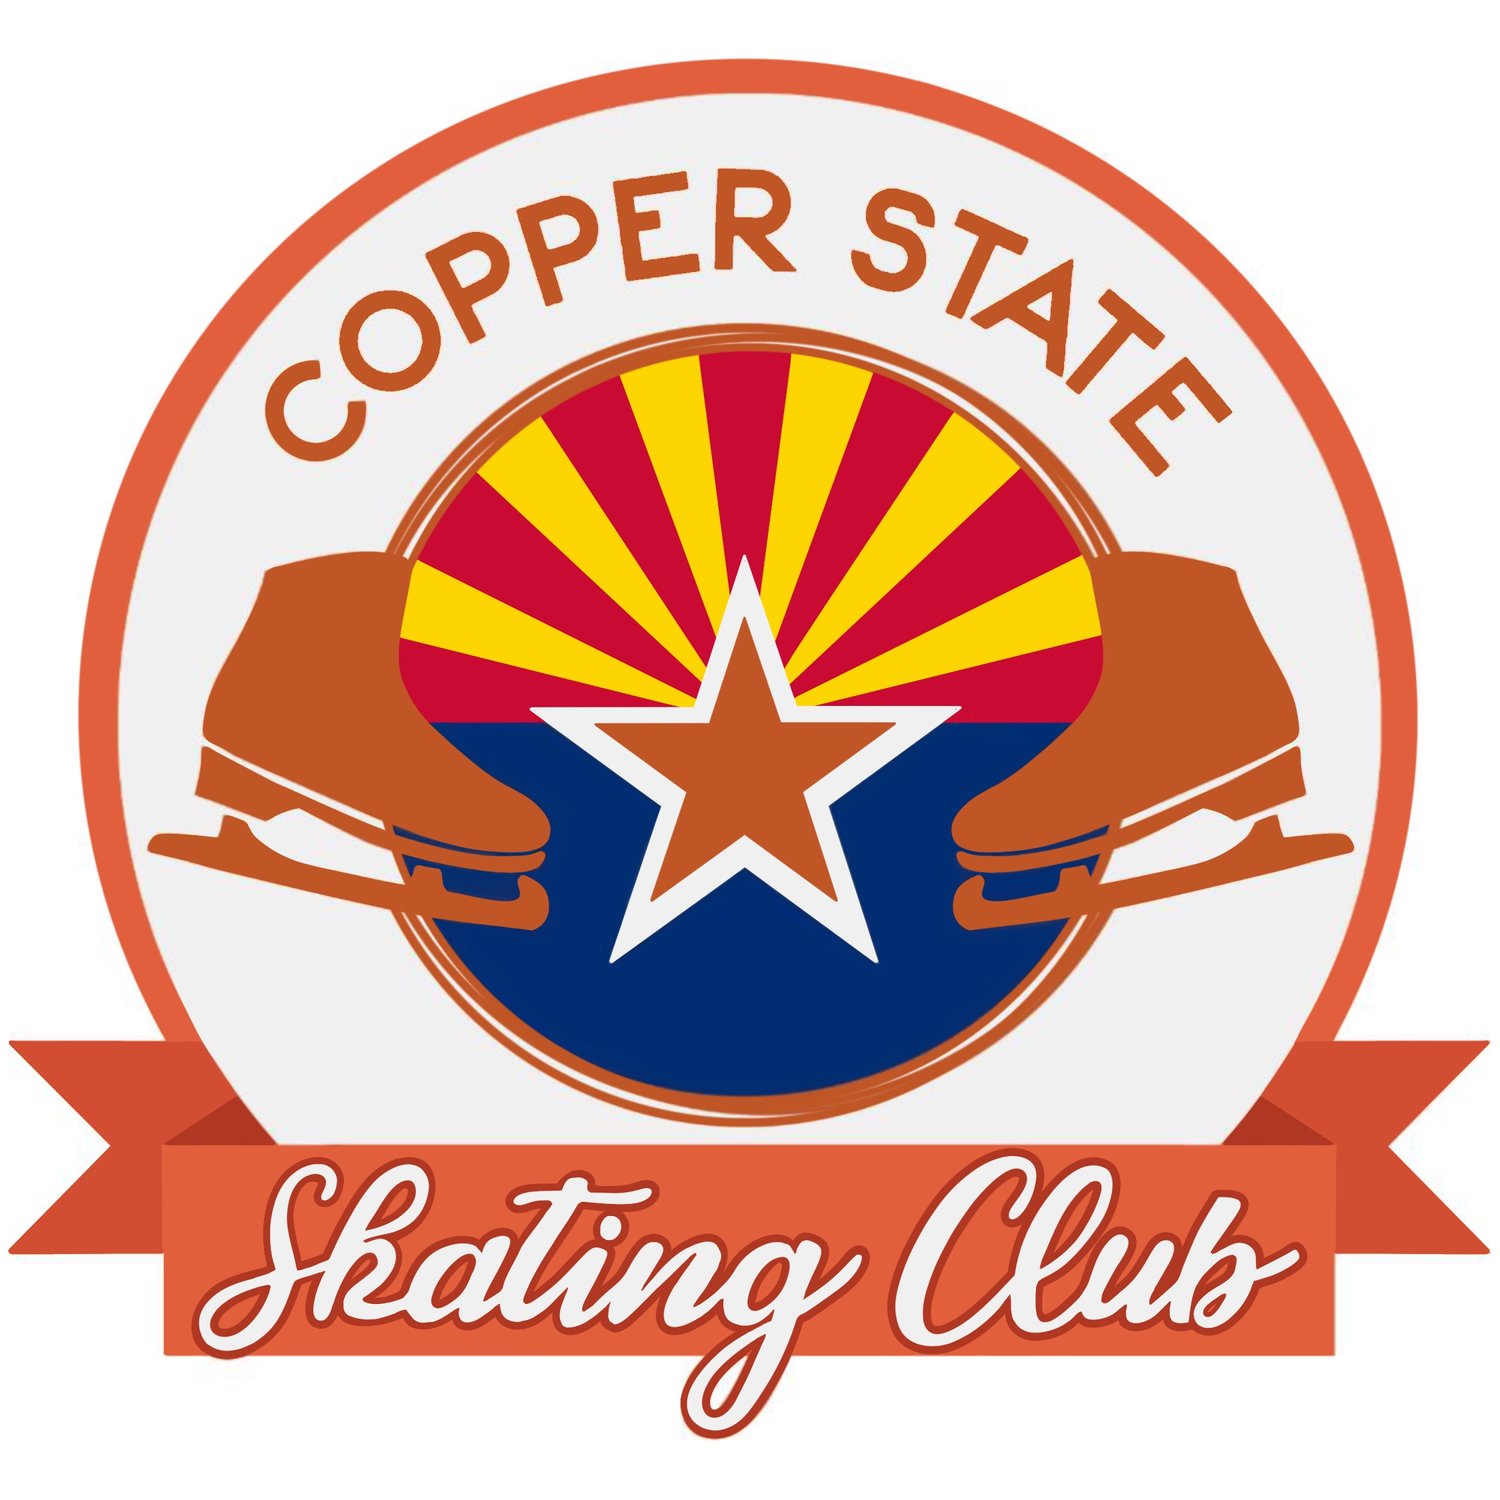 Copper State Skating Club